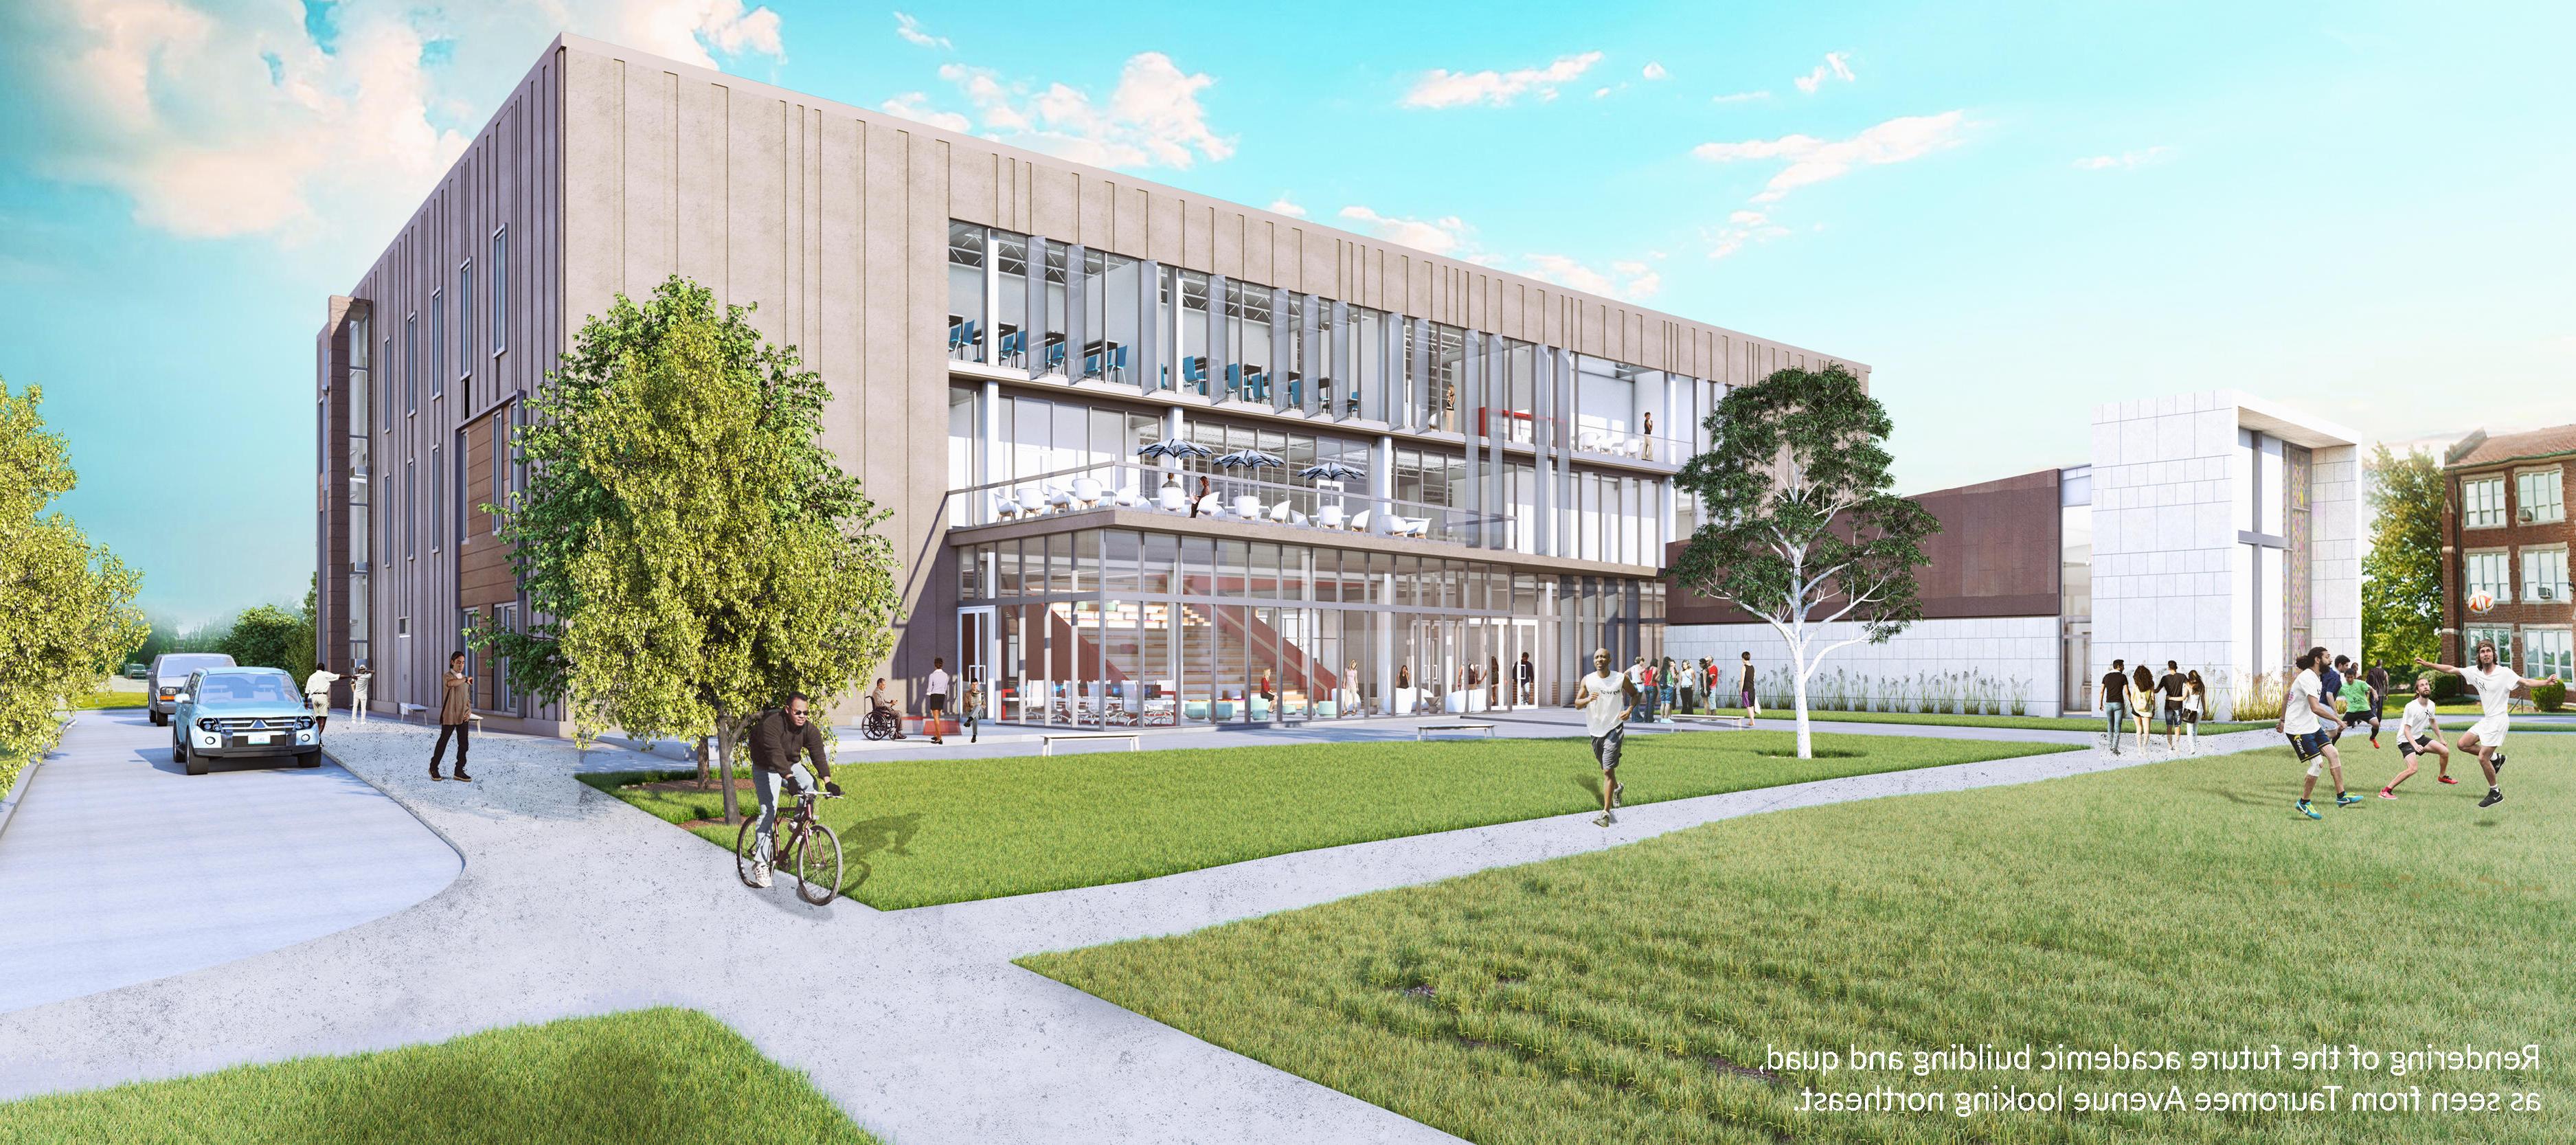 Rendering of future academic building 